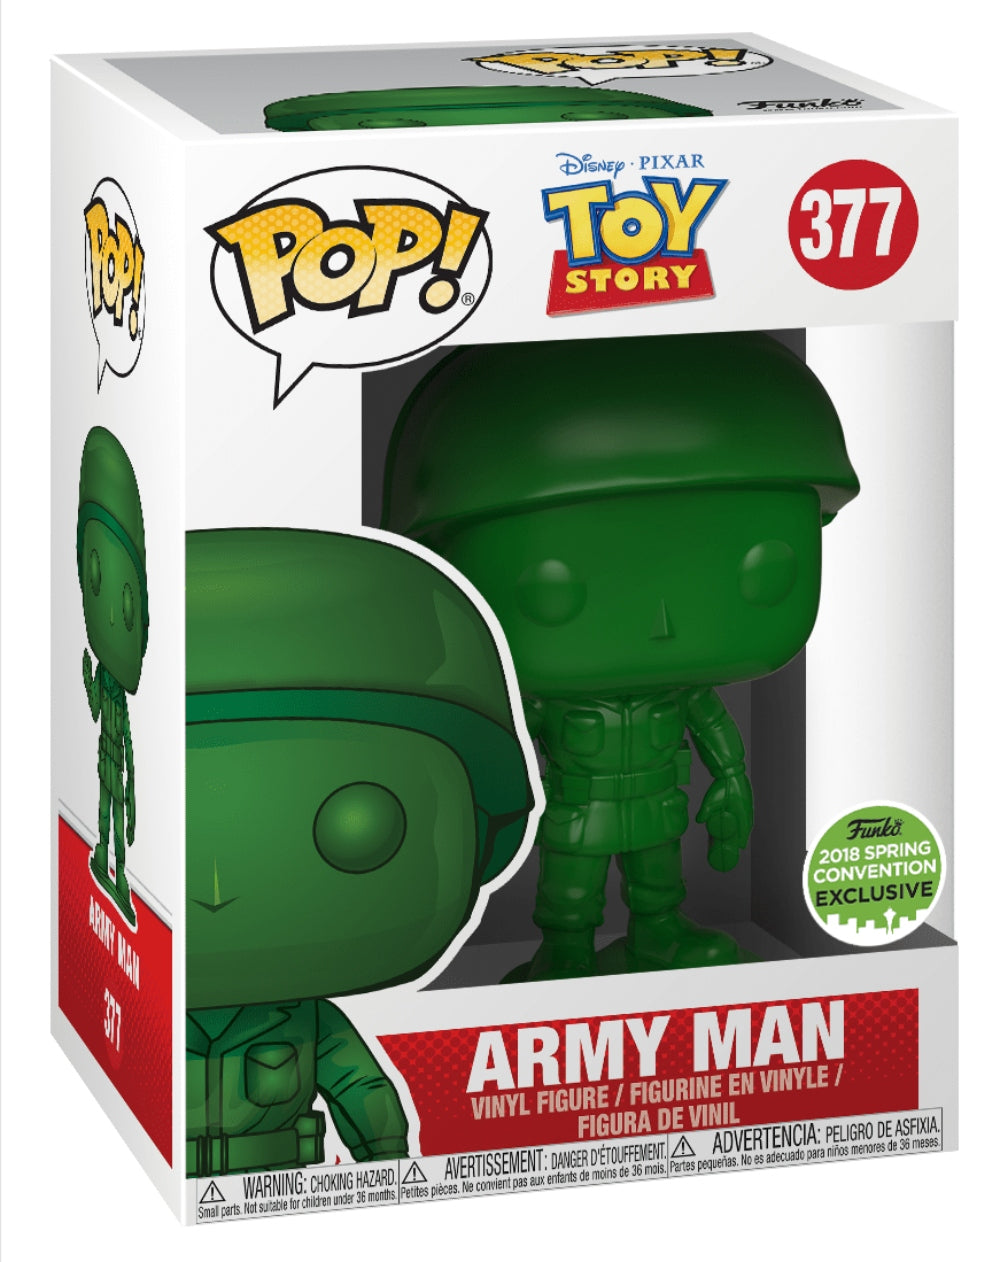 POP! Disney: 377 Toy Story, Army Man Exclusive